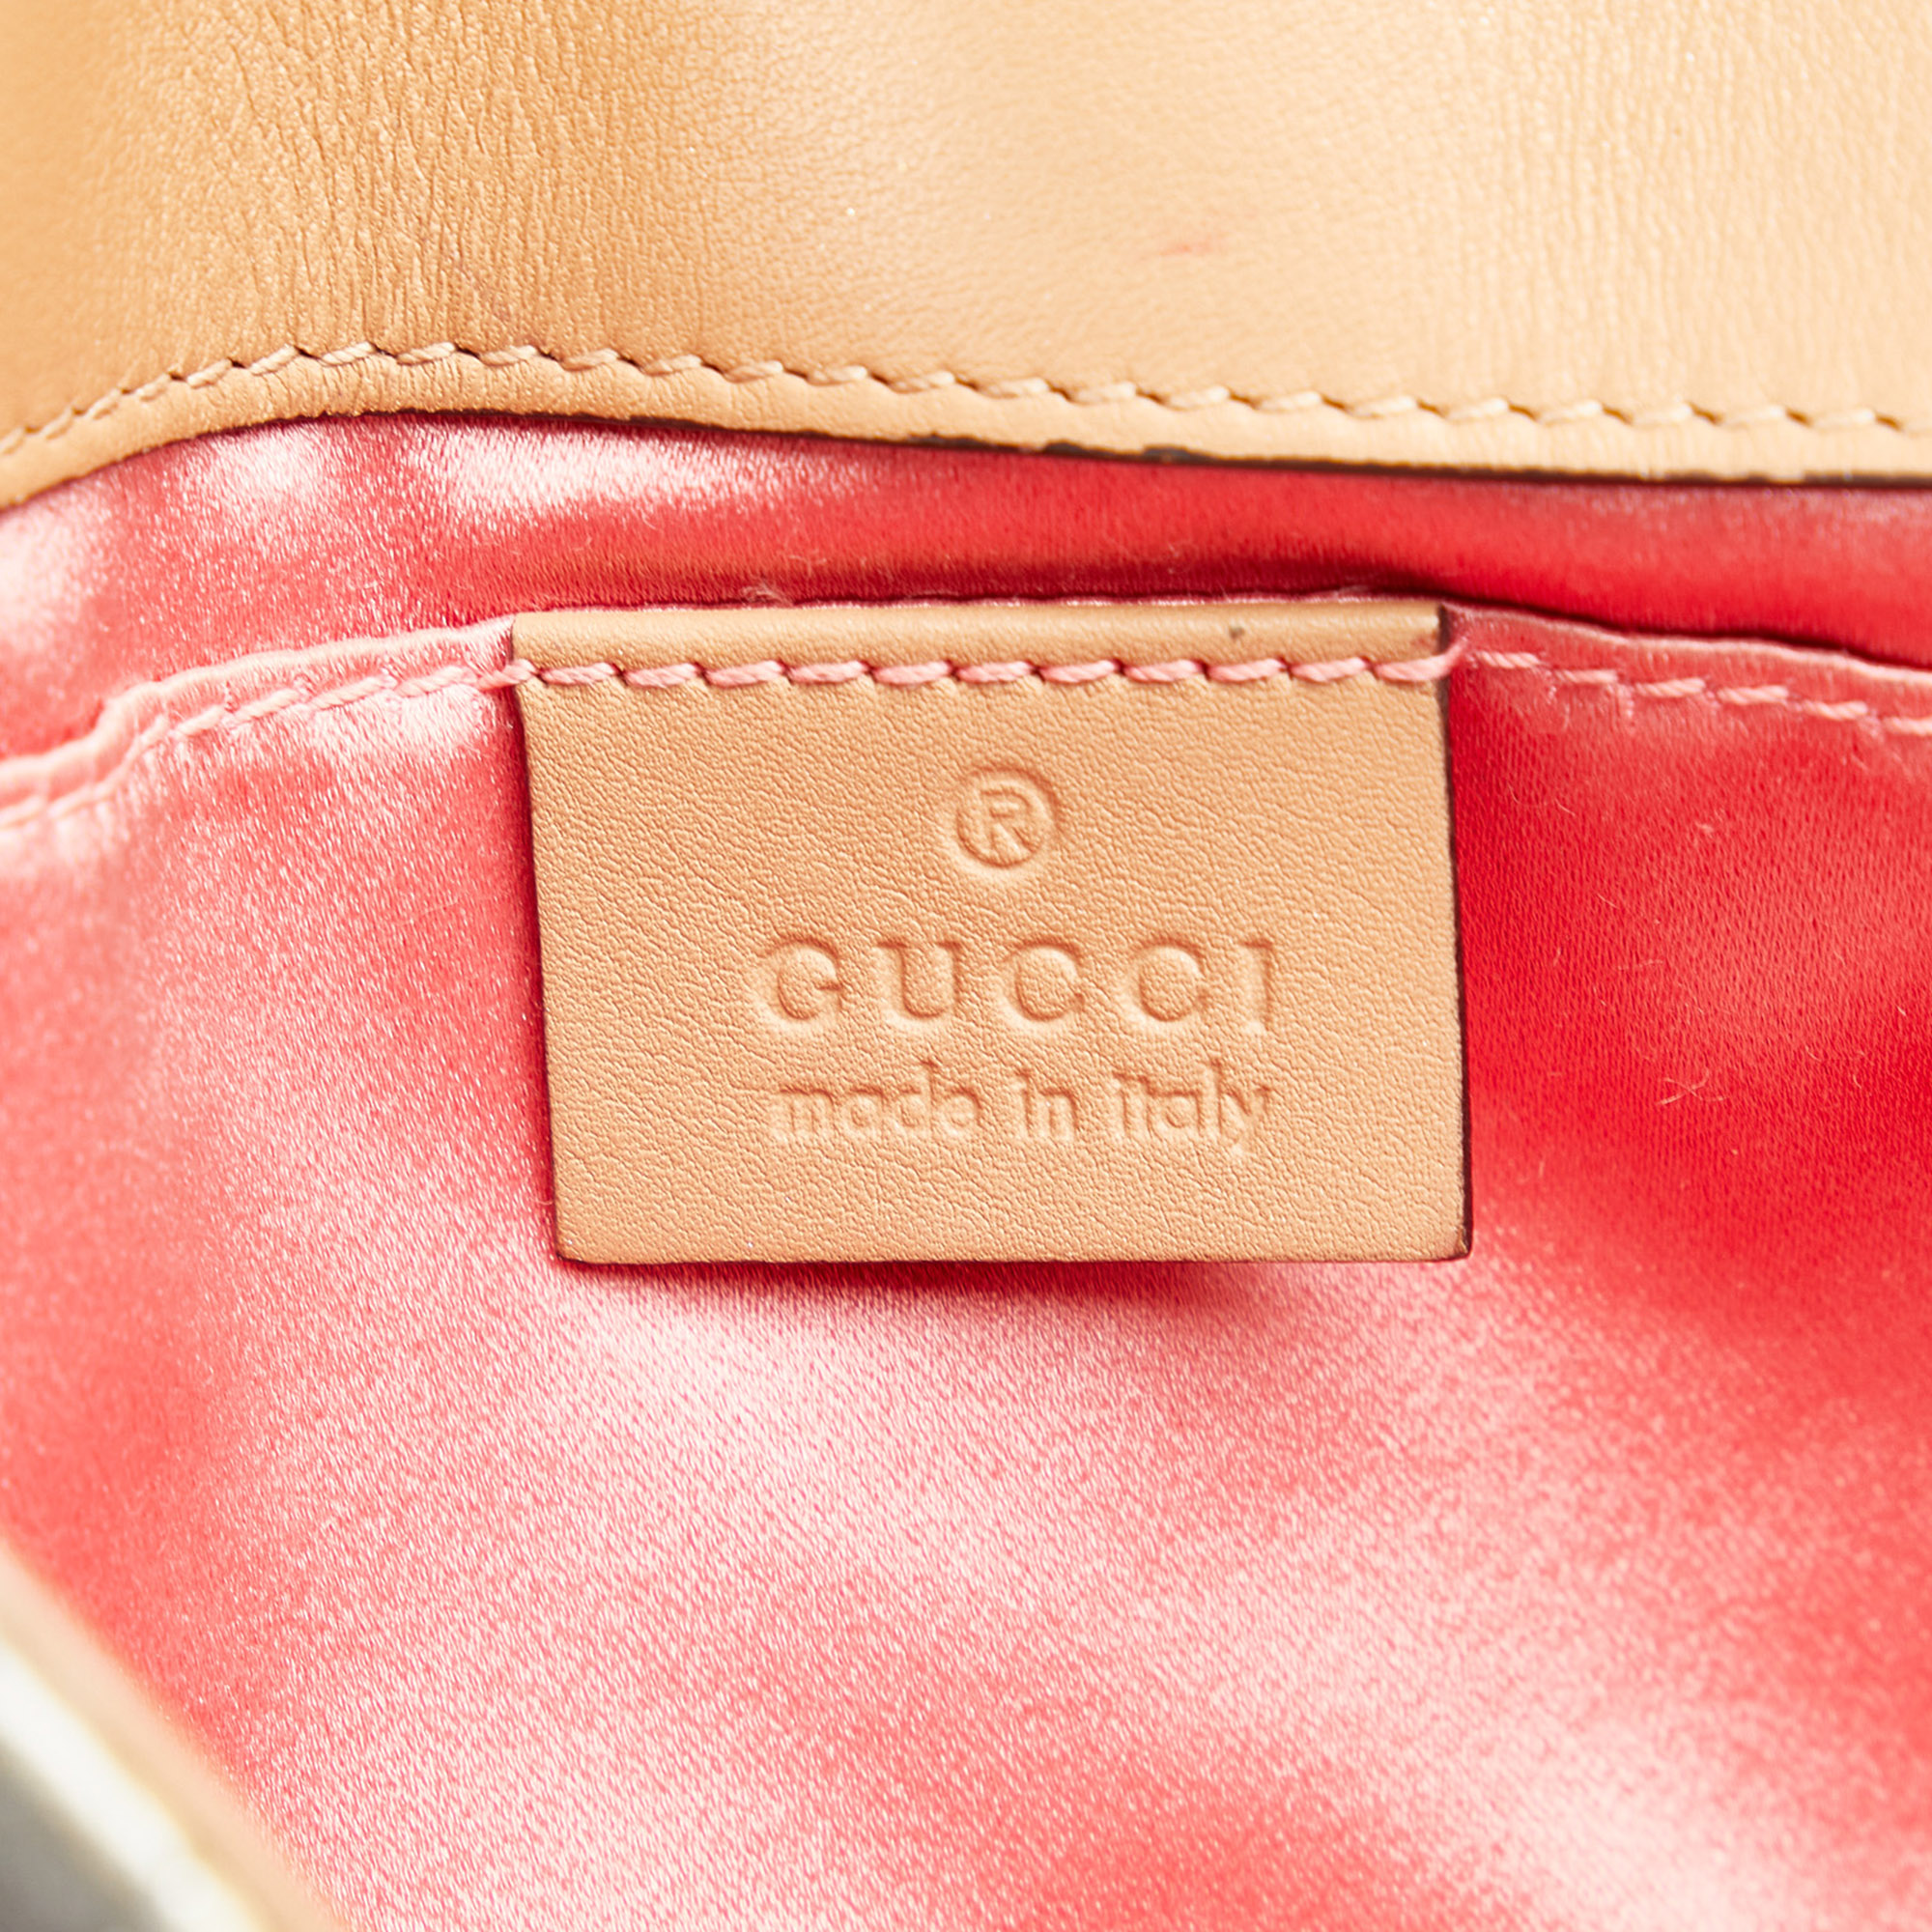 Gucci Silver Mini GG Marmont Matelasse Pearl Crossbody Bag